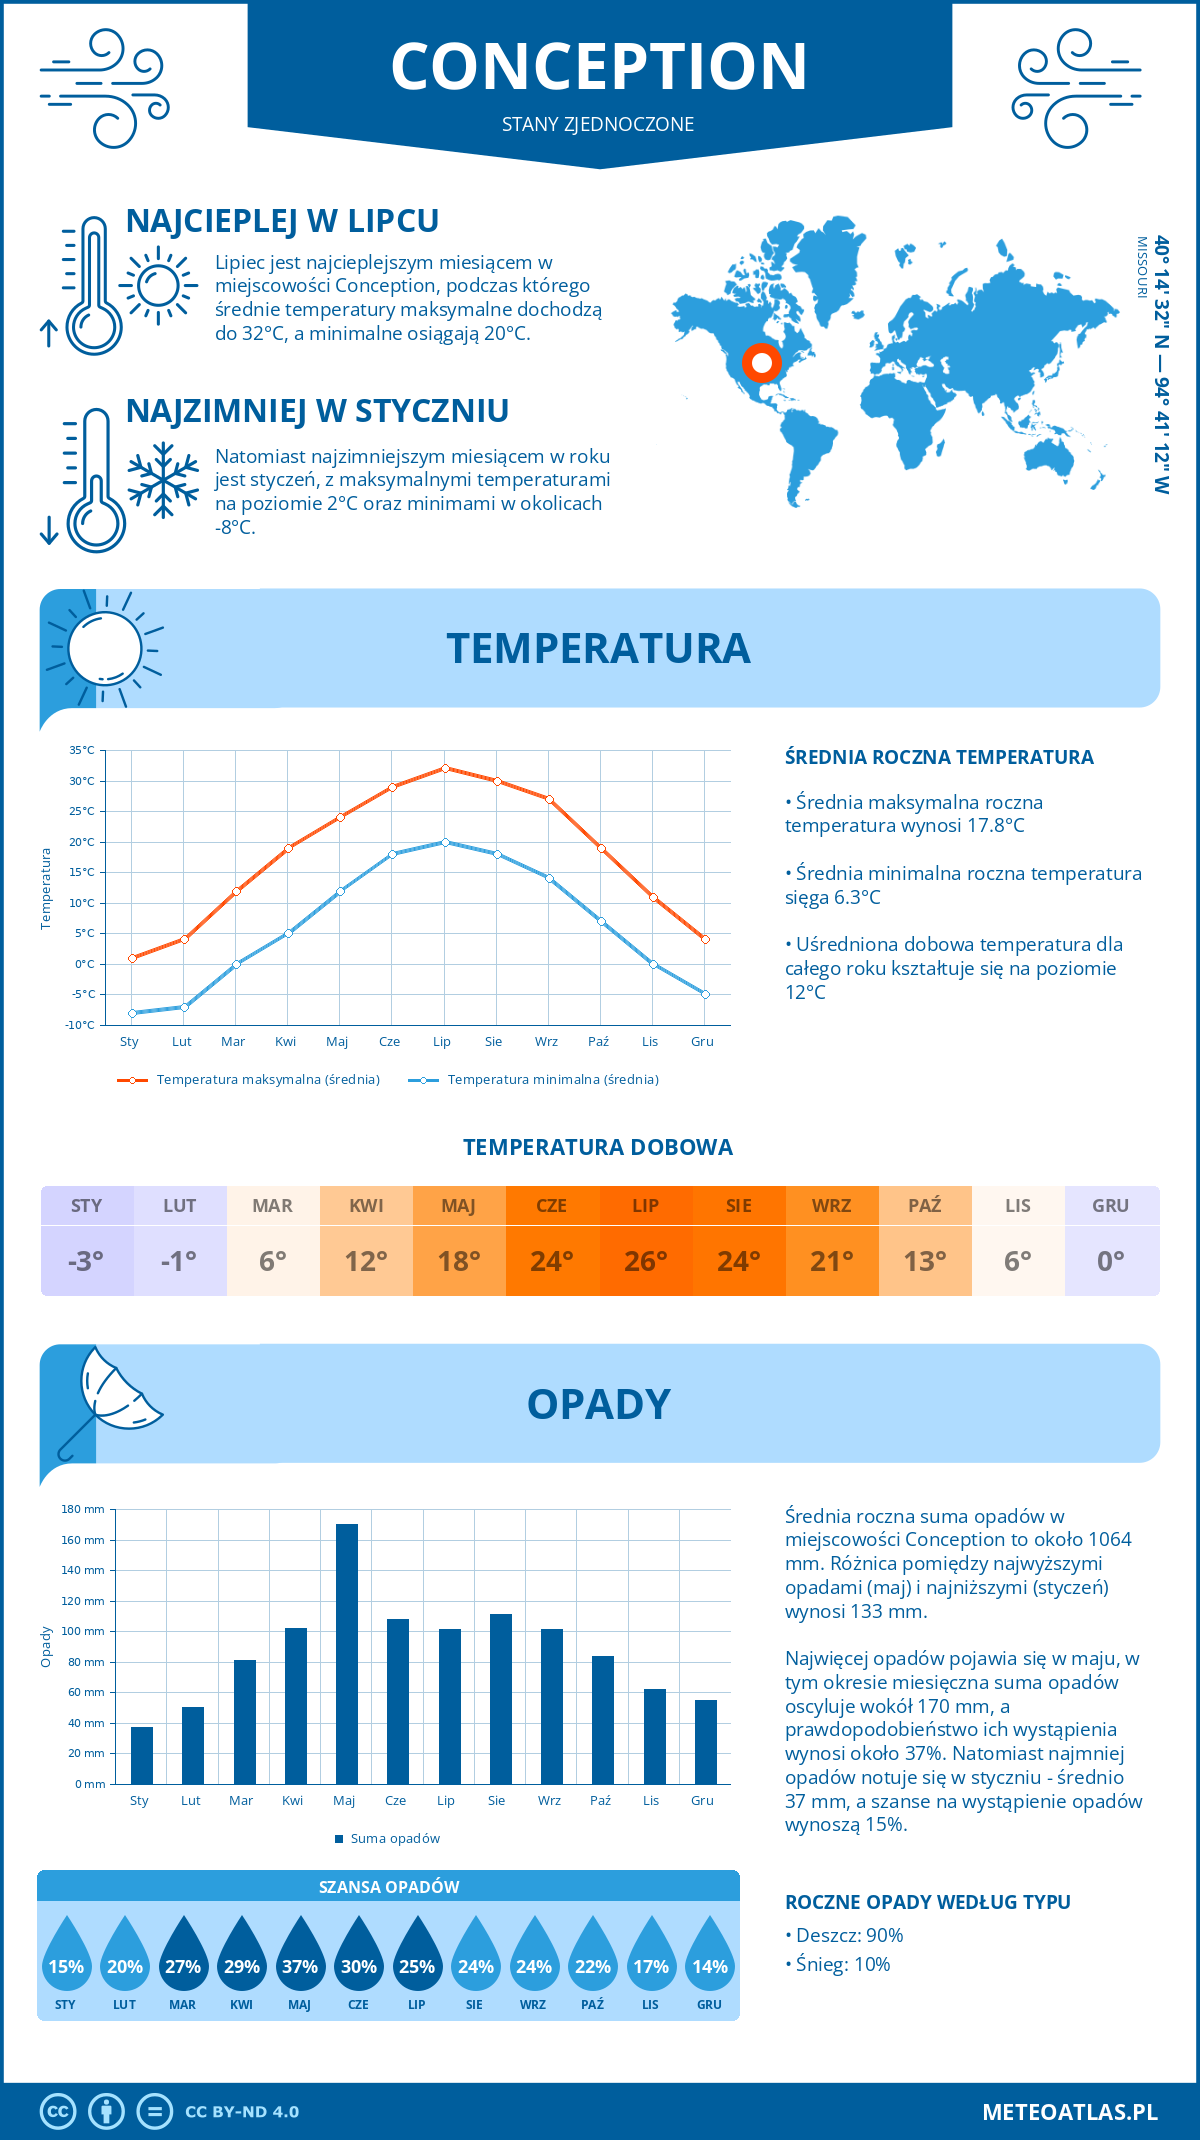 Pogoda Conception (Stany Zjednoczone). Temperatura oraz opady.